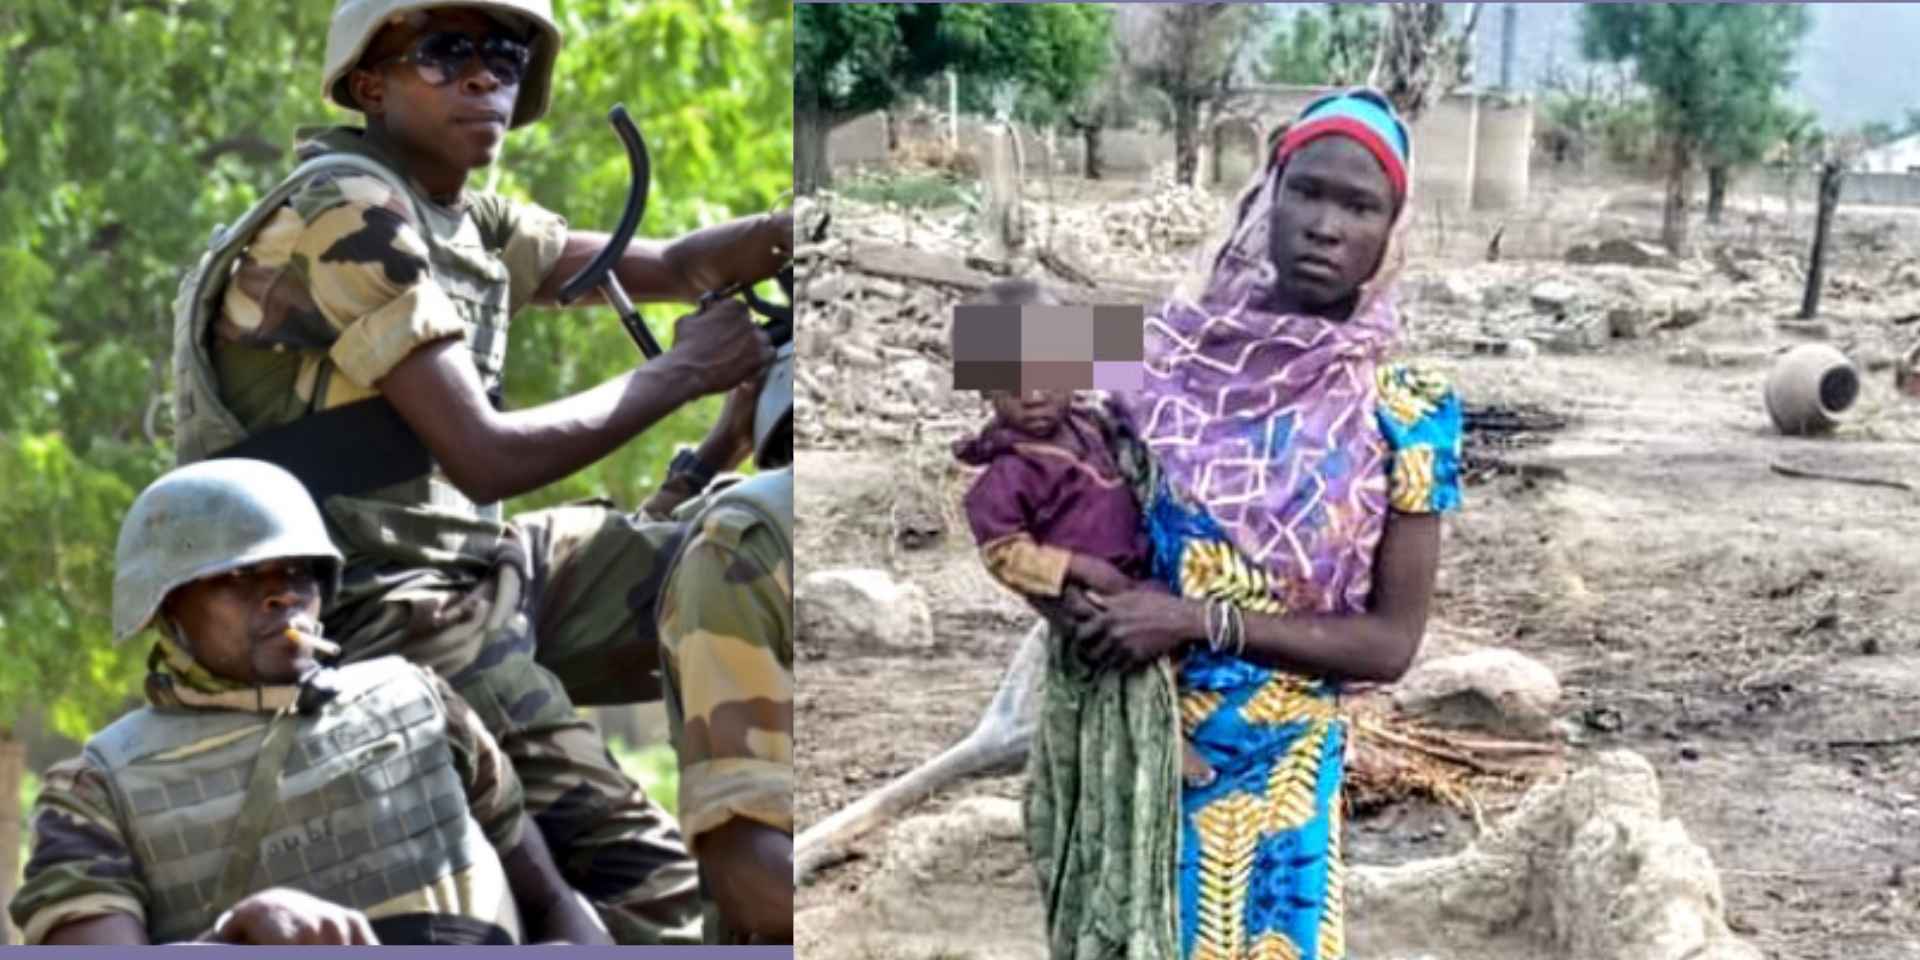 Nigerians express concern as soldiers find abducted Chibok schoolgirl in Borno